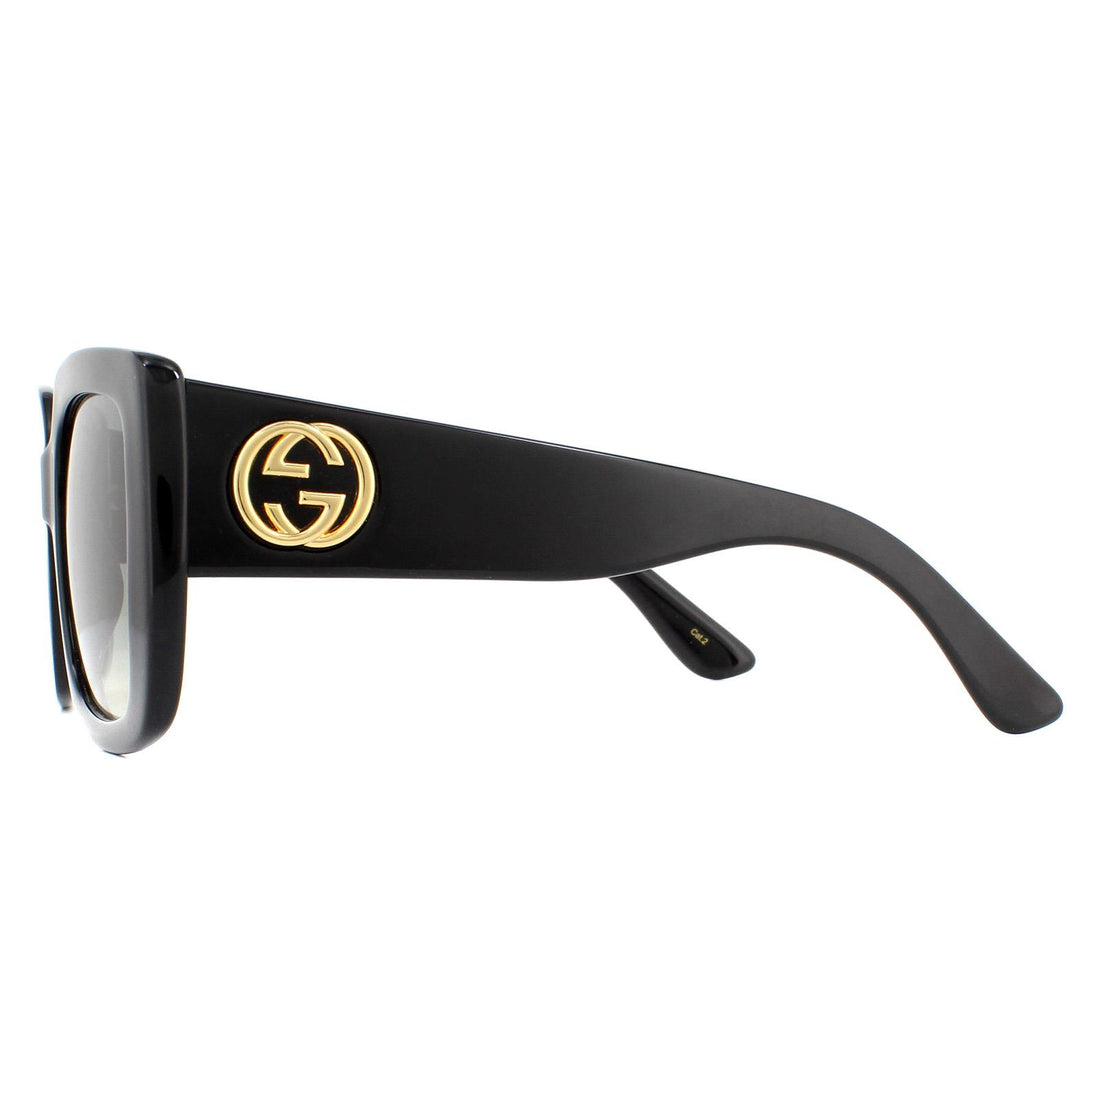 Sunglasses Gucci Web GG0034SN-001 Woman | Free Shipping Shop Online